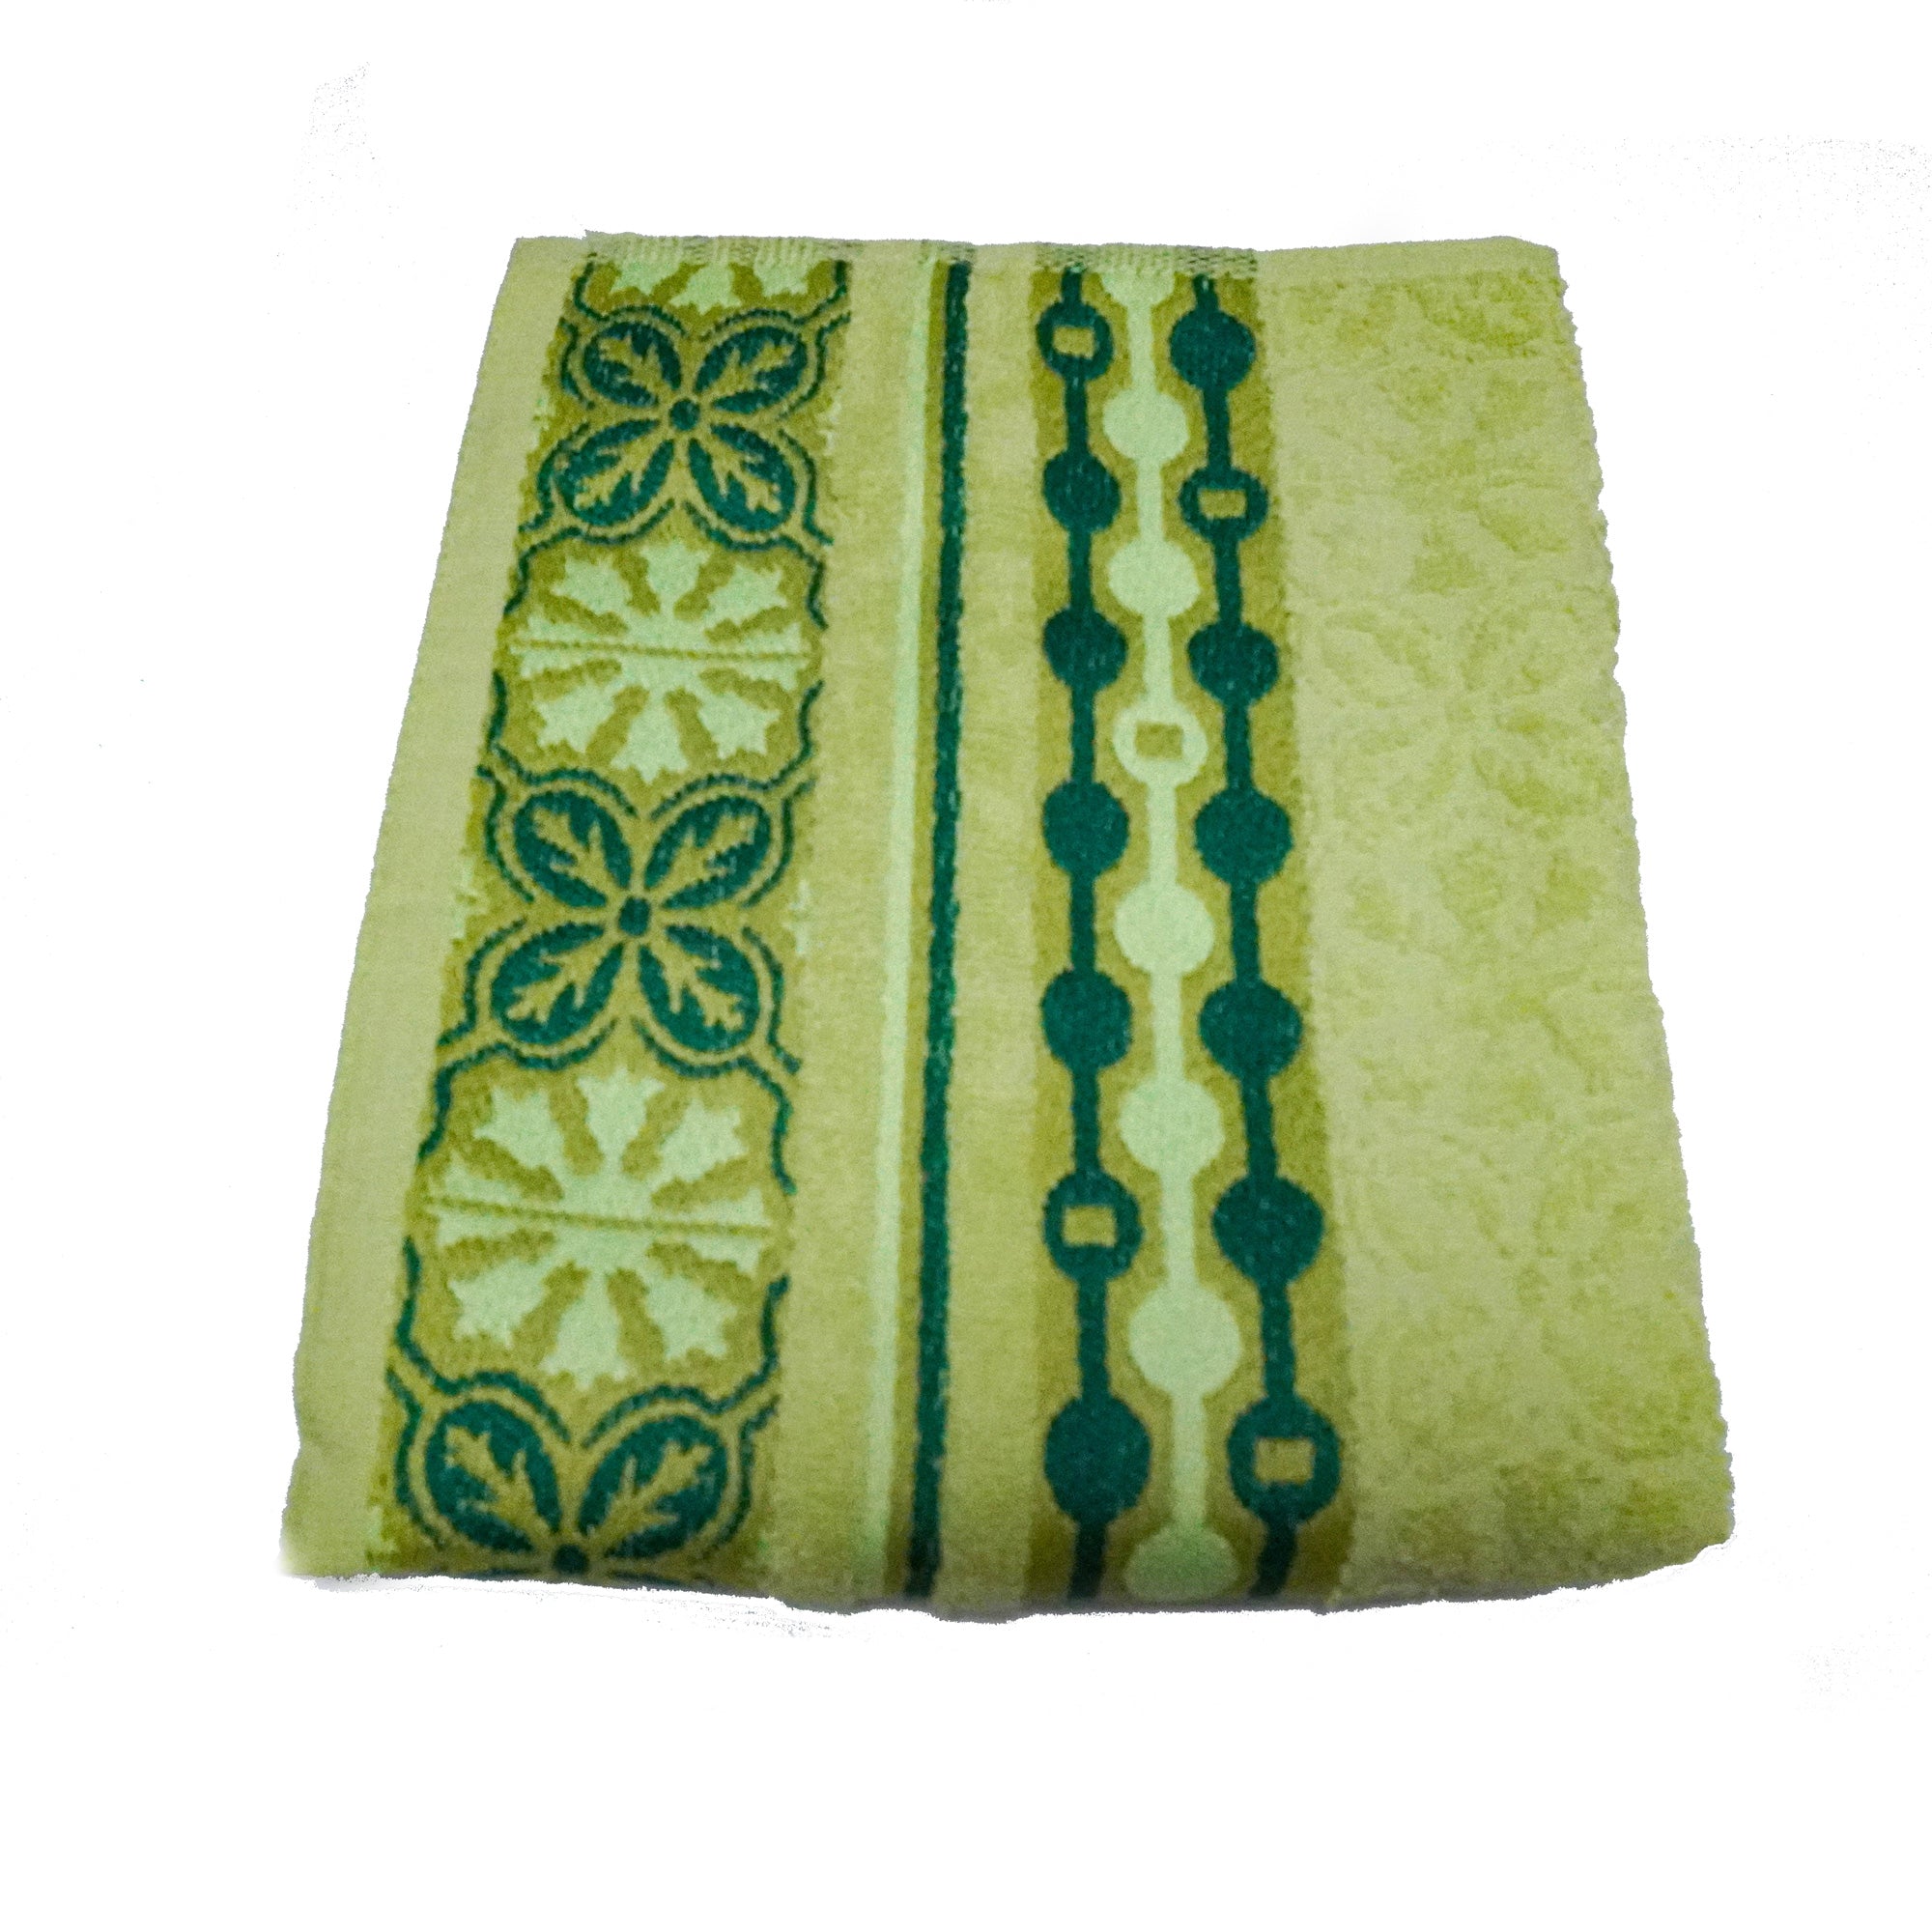 Lilac towel set - Sofia Collection